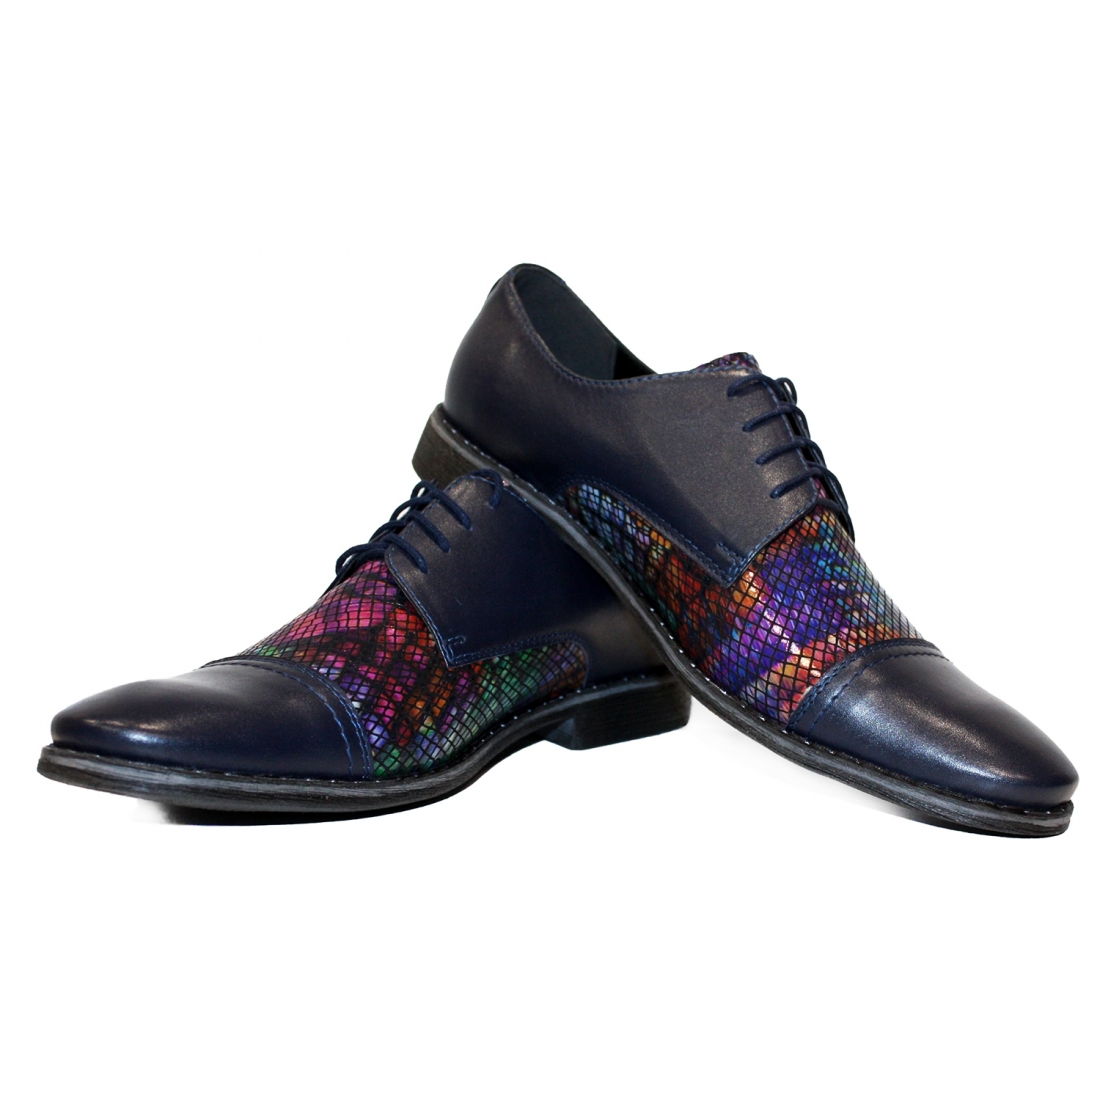 Modello Cubello - Классическая обувь - Handmade Colorful Italian Leather Shoes